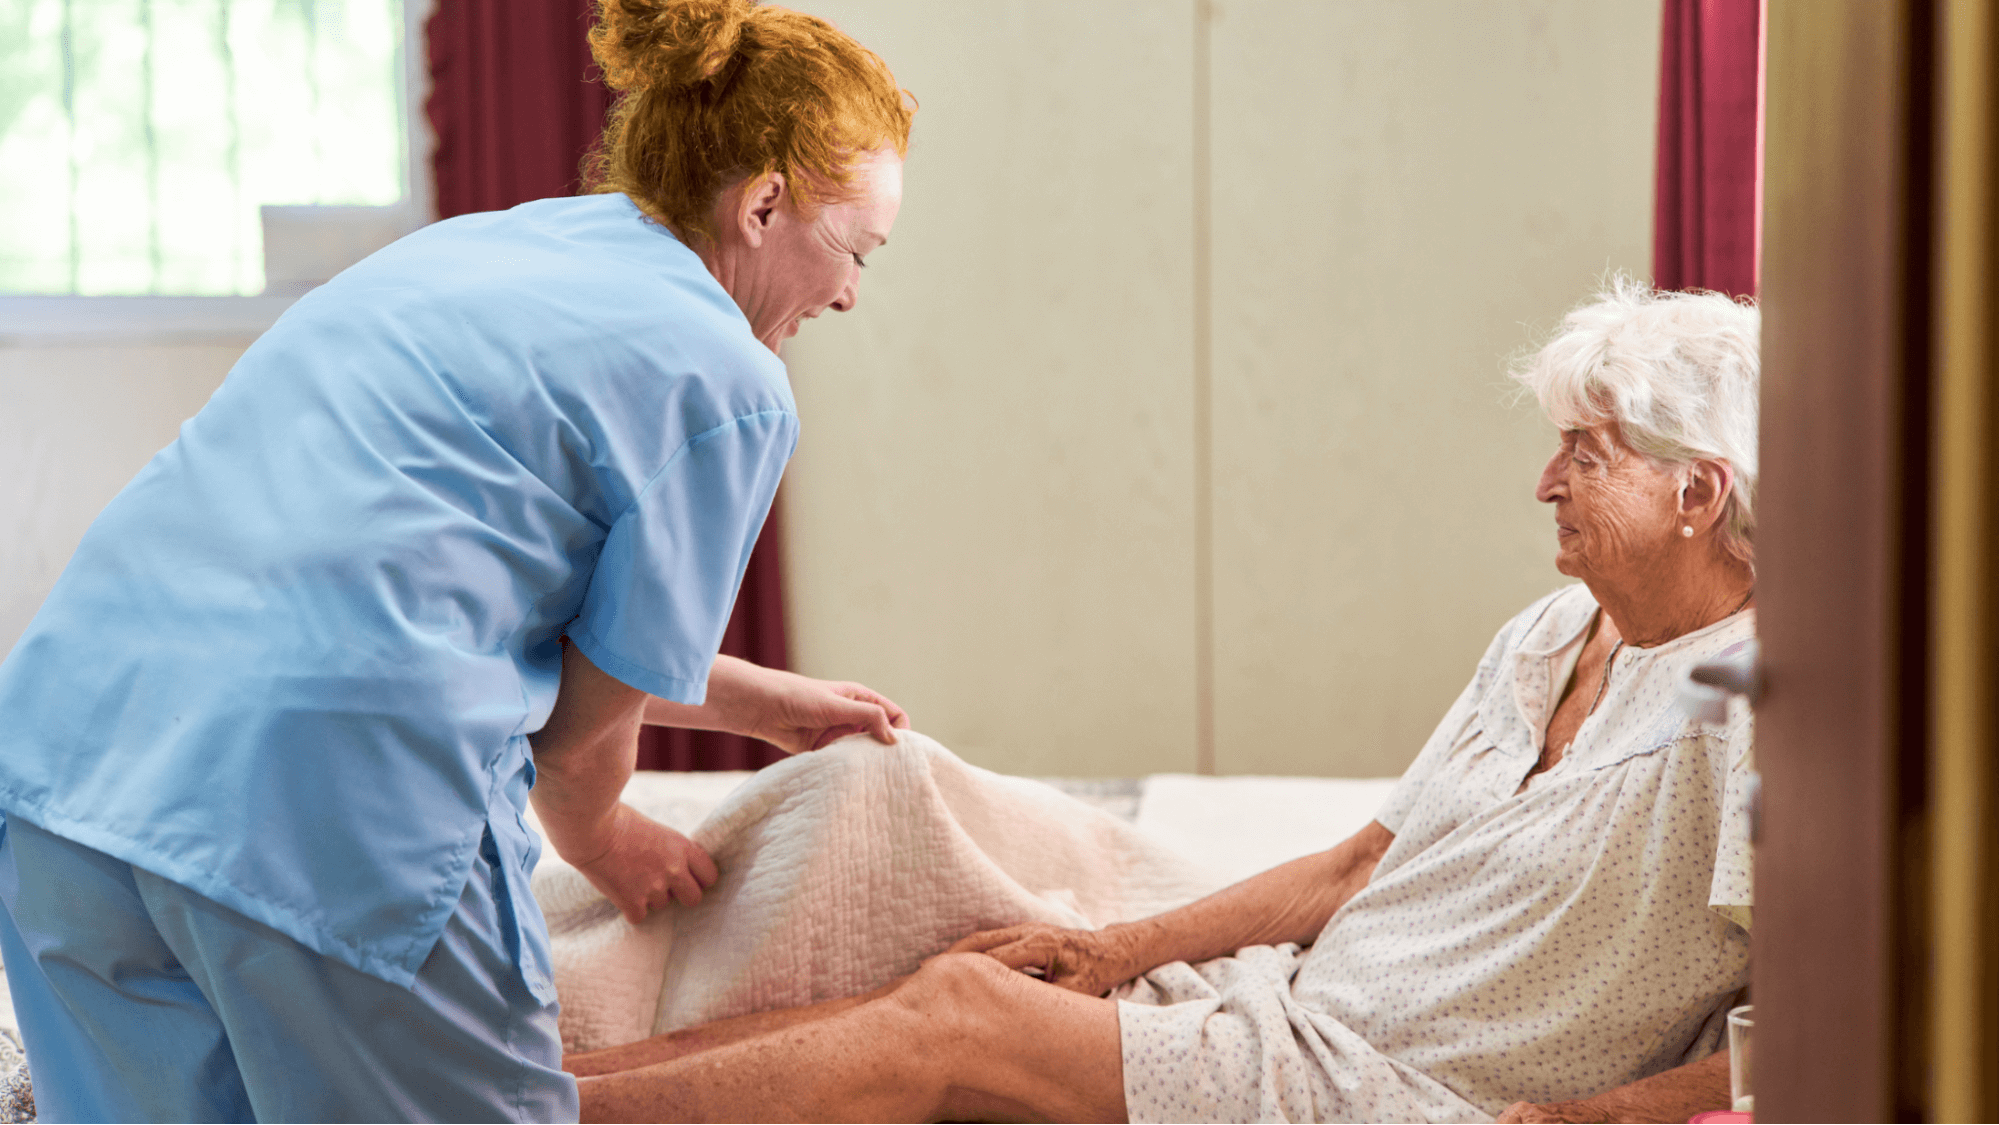 Female caregiver wearing uniform assisting senior woman on bed holding bed sheet